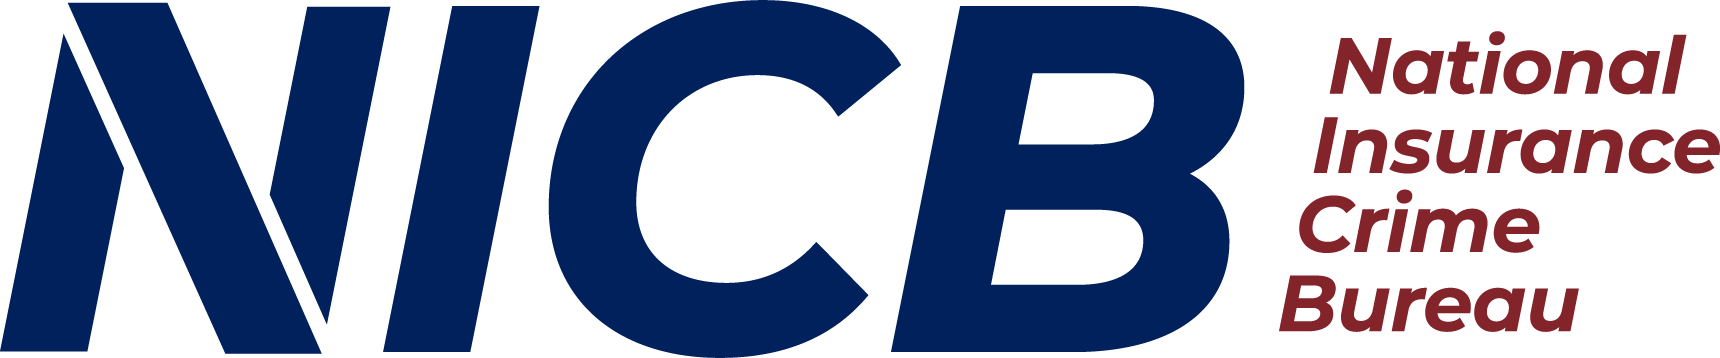 NICB dark blue logo with slightly slanted font in all upper case